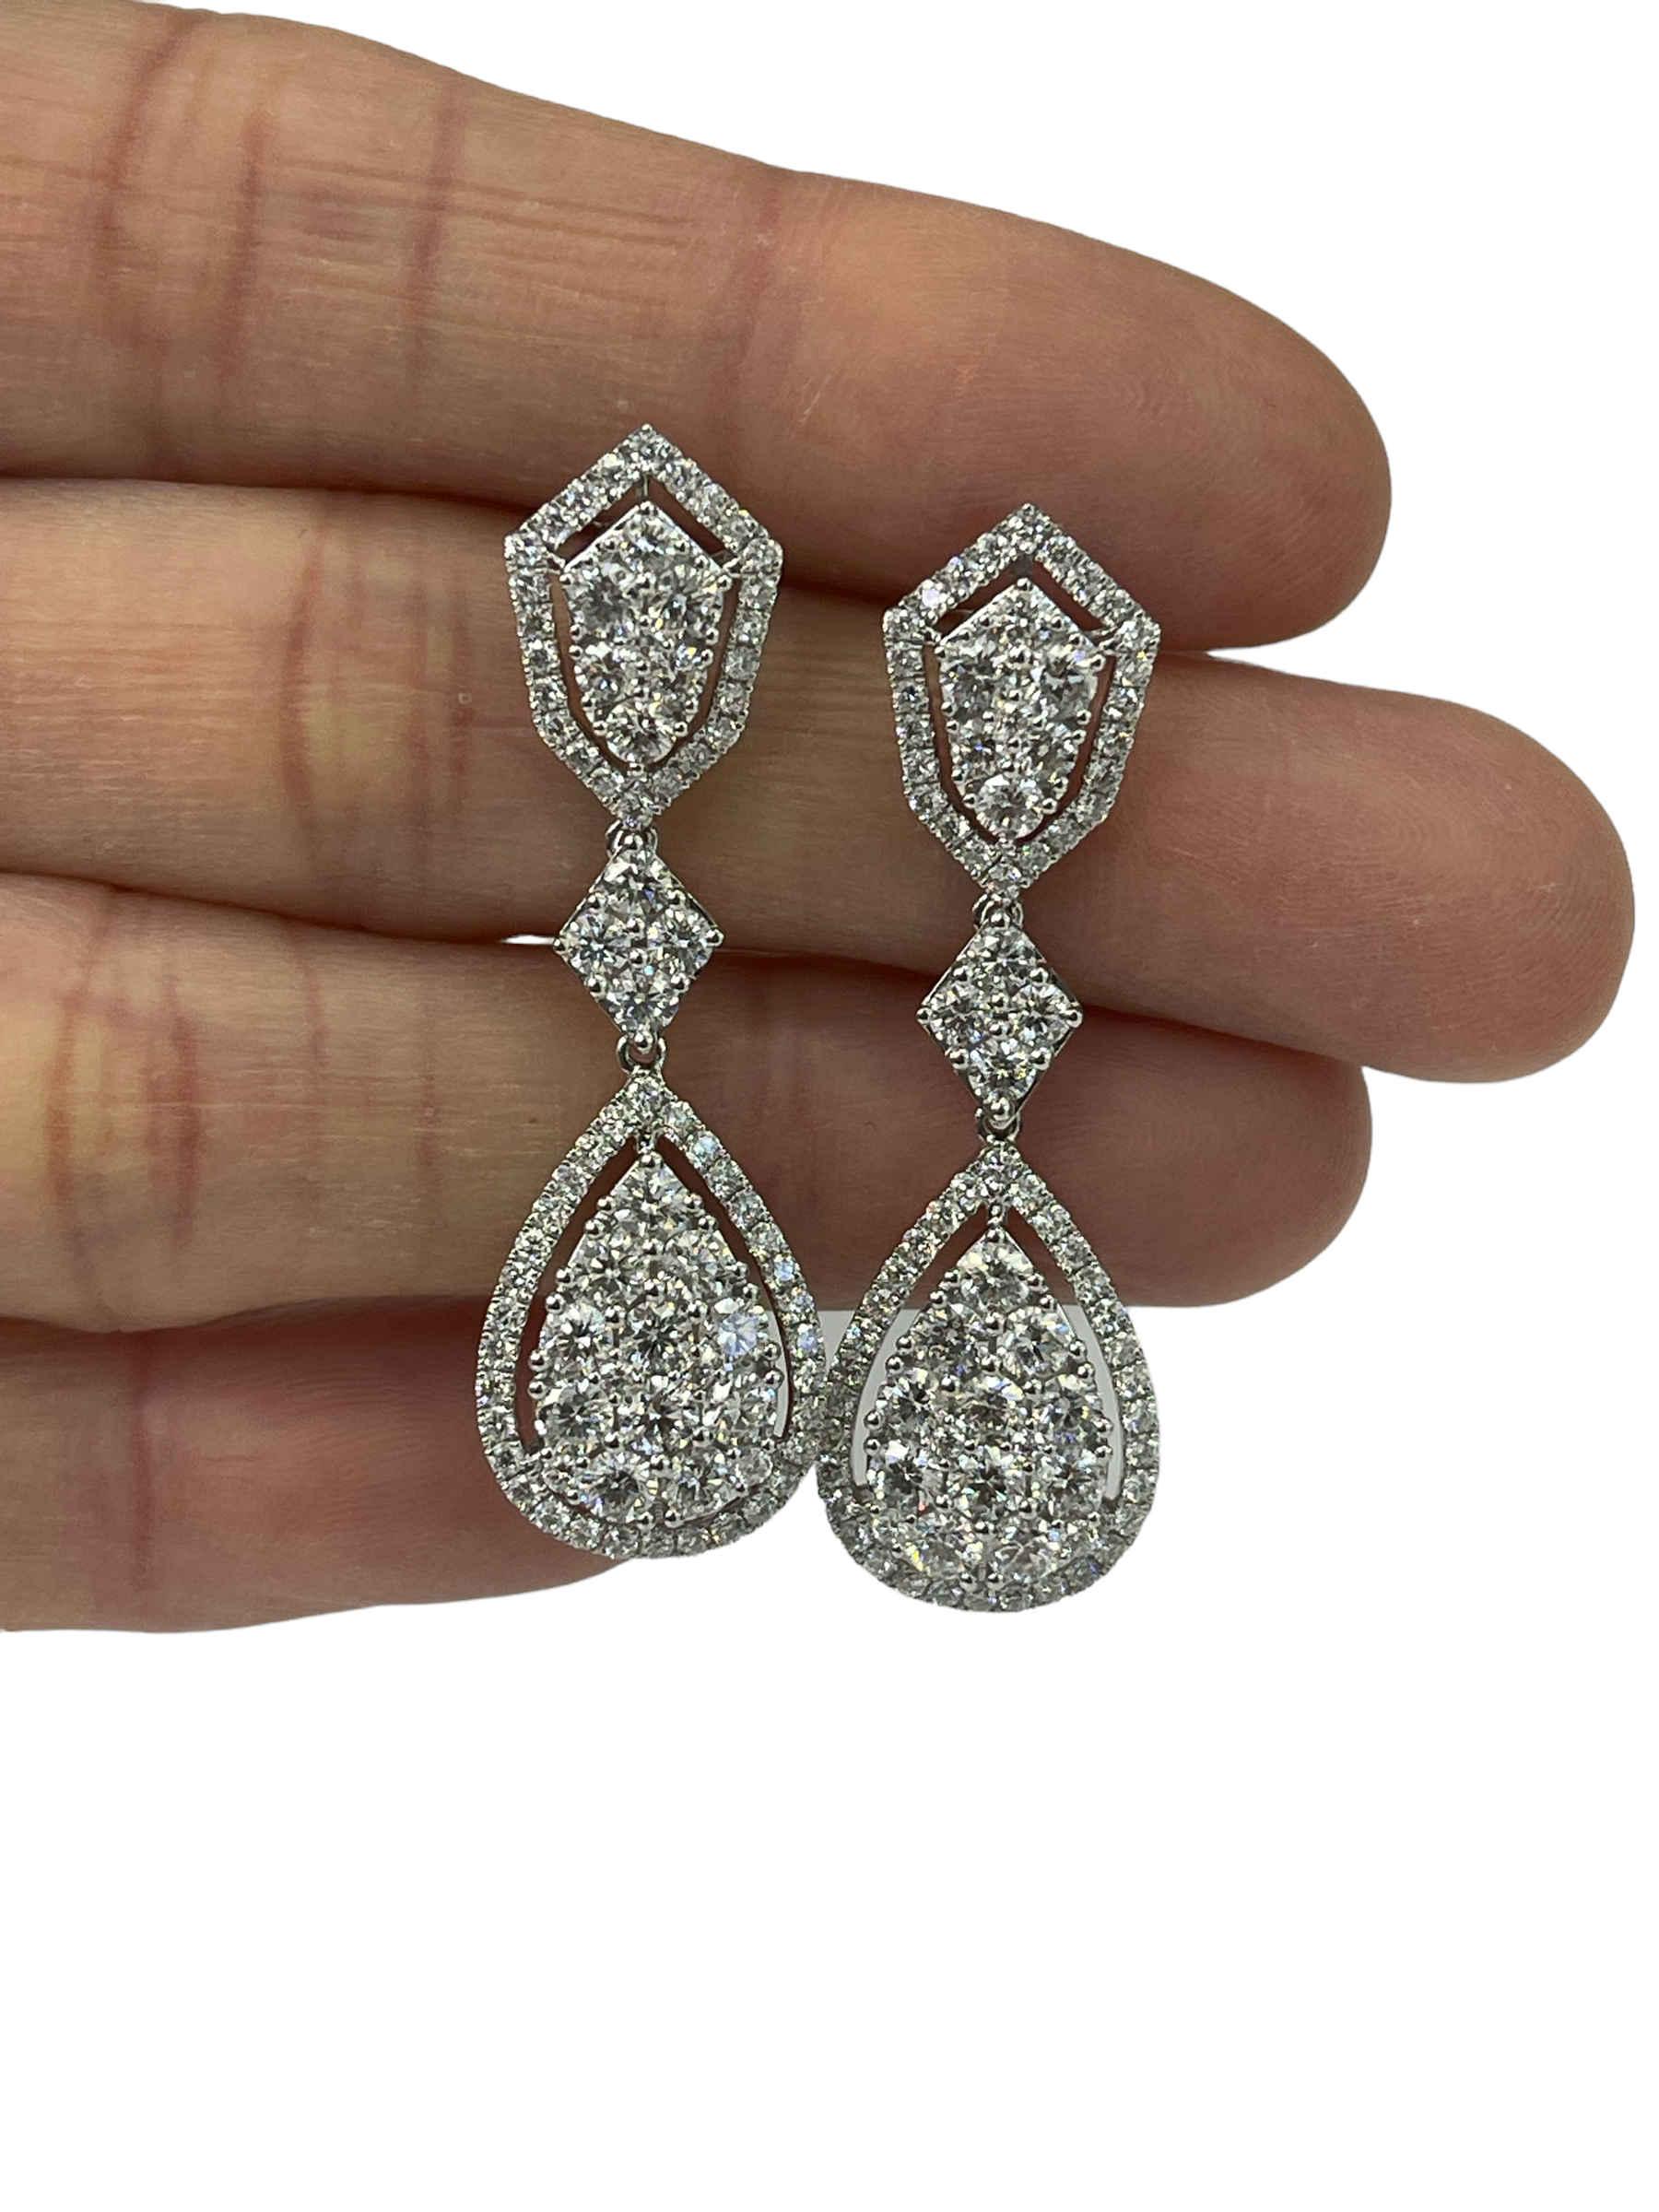 Round Brilliants Cluster Diamond Dangling Earrings White Gold 18kt